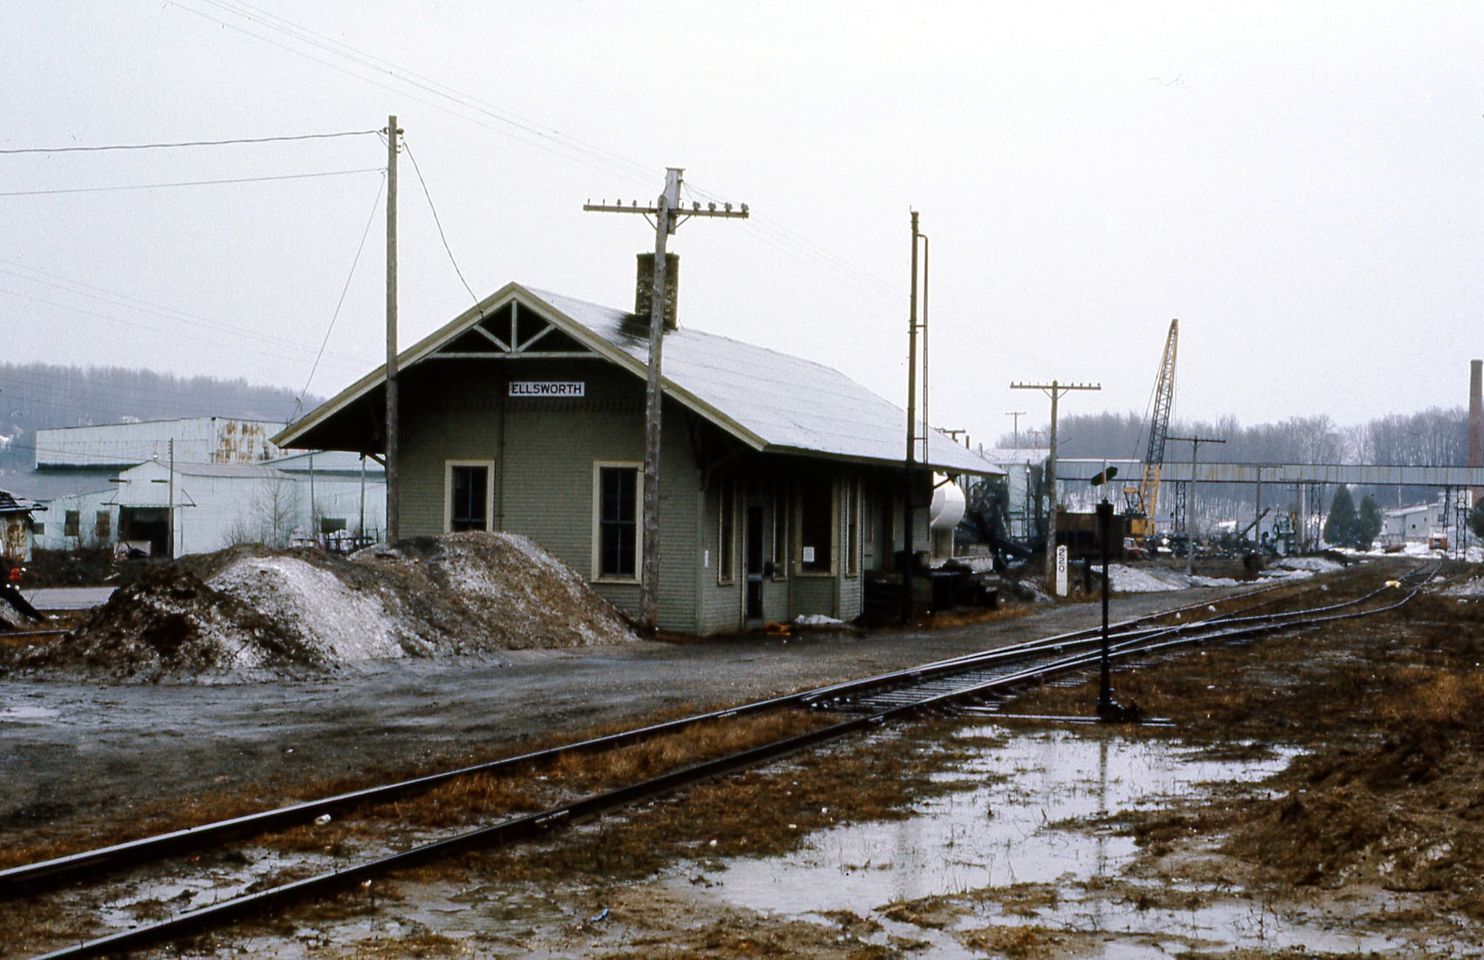 PM Ellsworth Depot